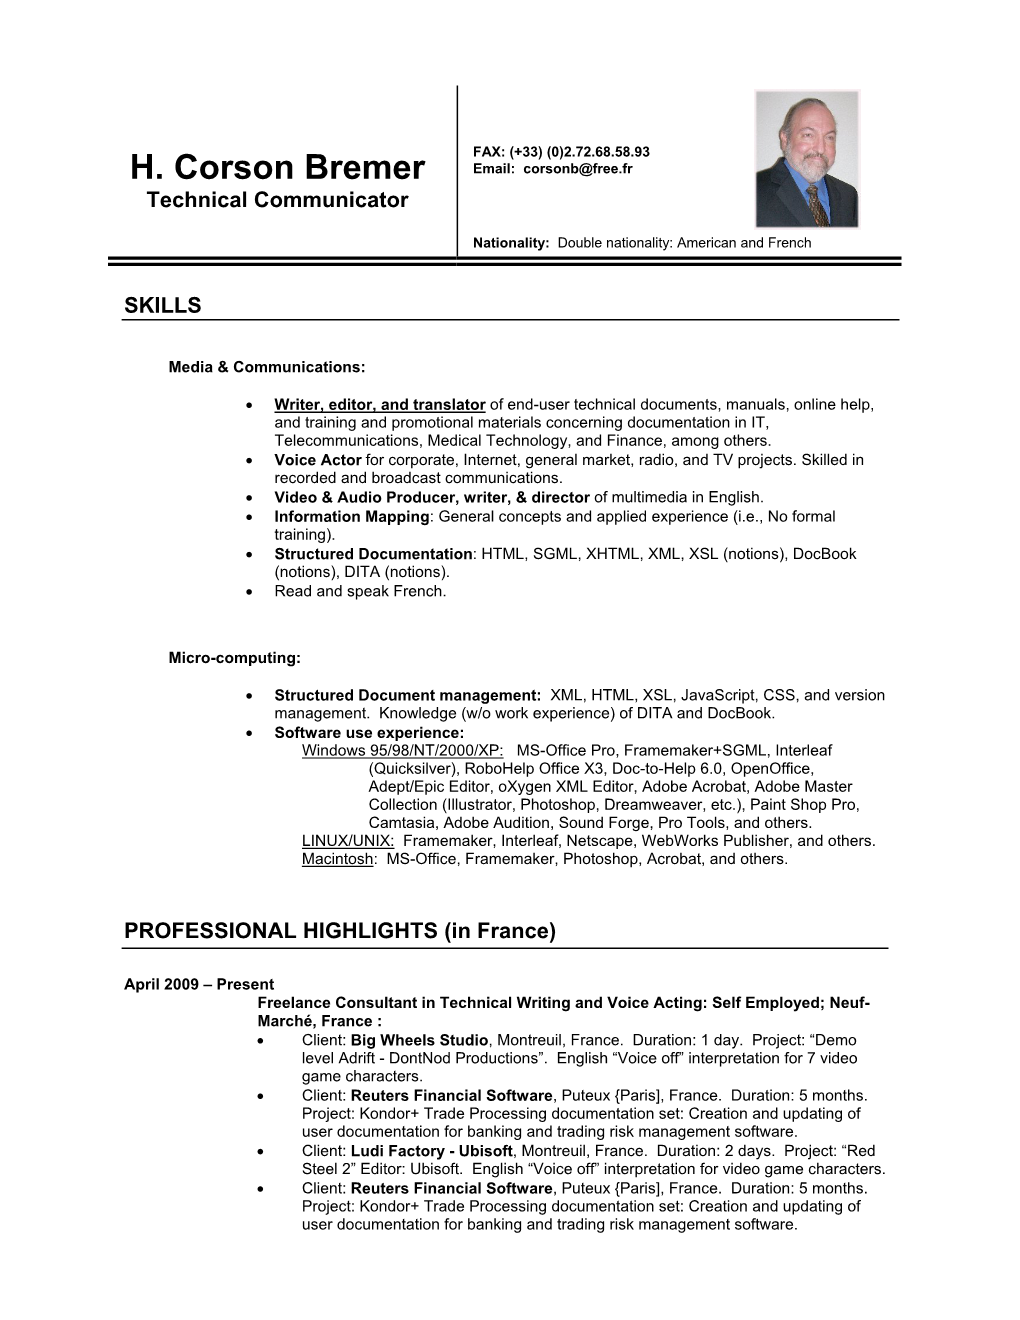 H. Corson Bremer Email: Corsonb@Free.Fr Technical Communicator